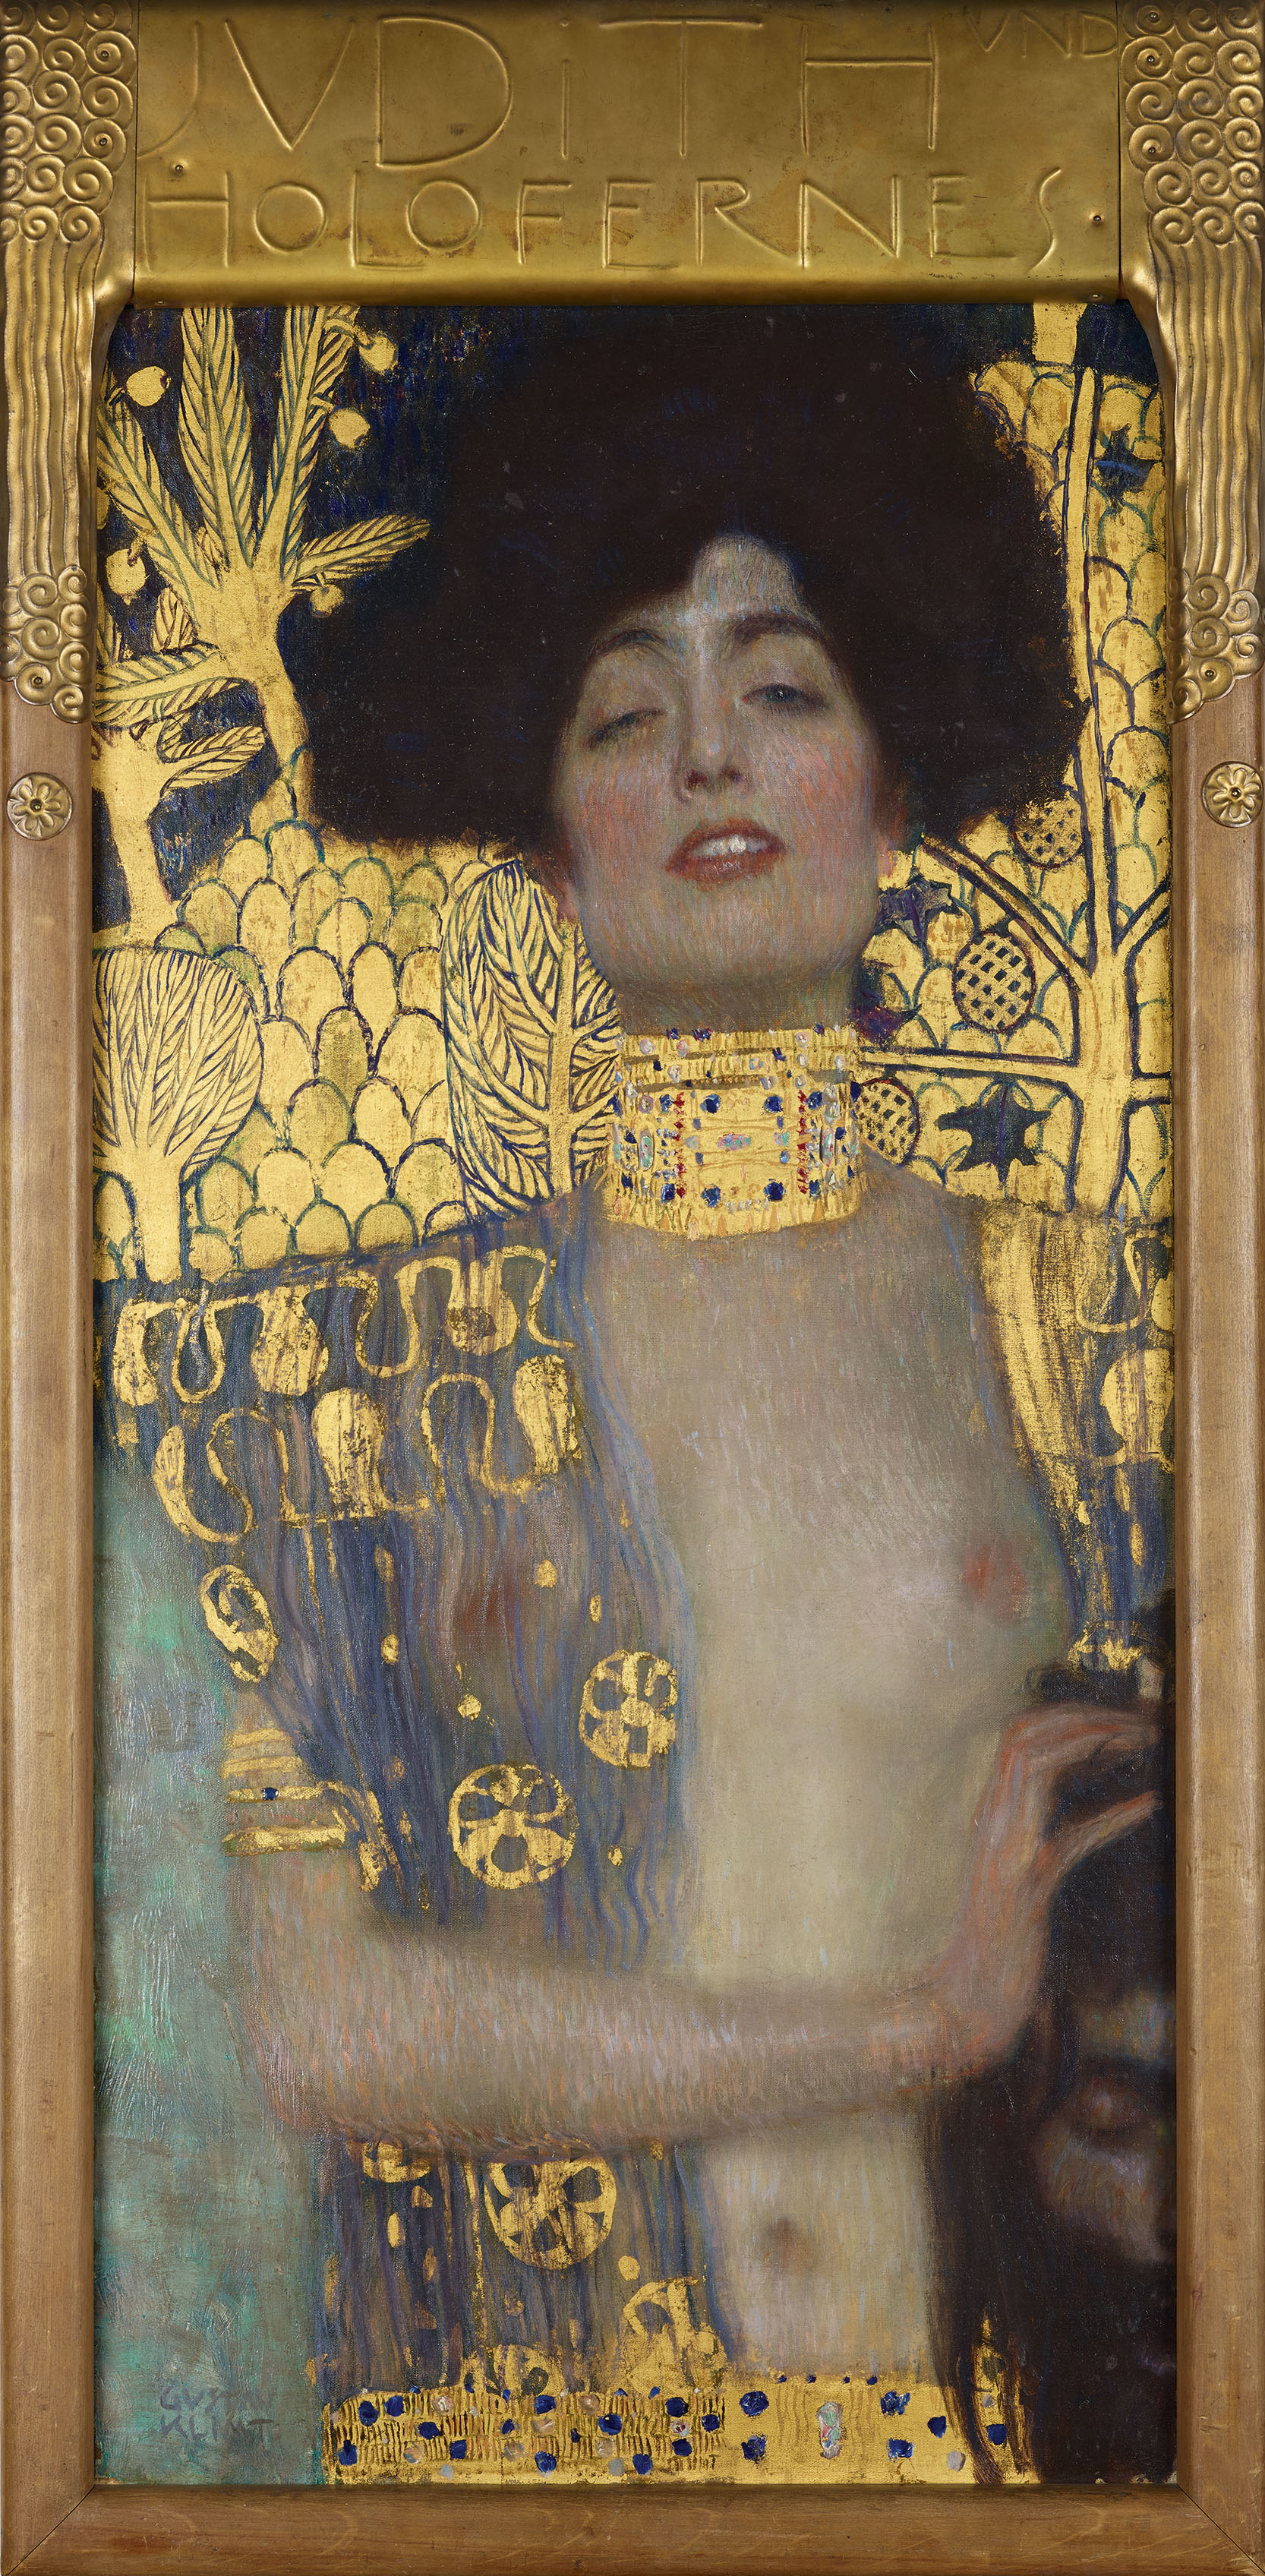 Judita a Holofernova hlava by Gustav Klimt - 1901 - 84 × 42 cm 